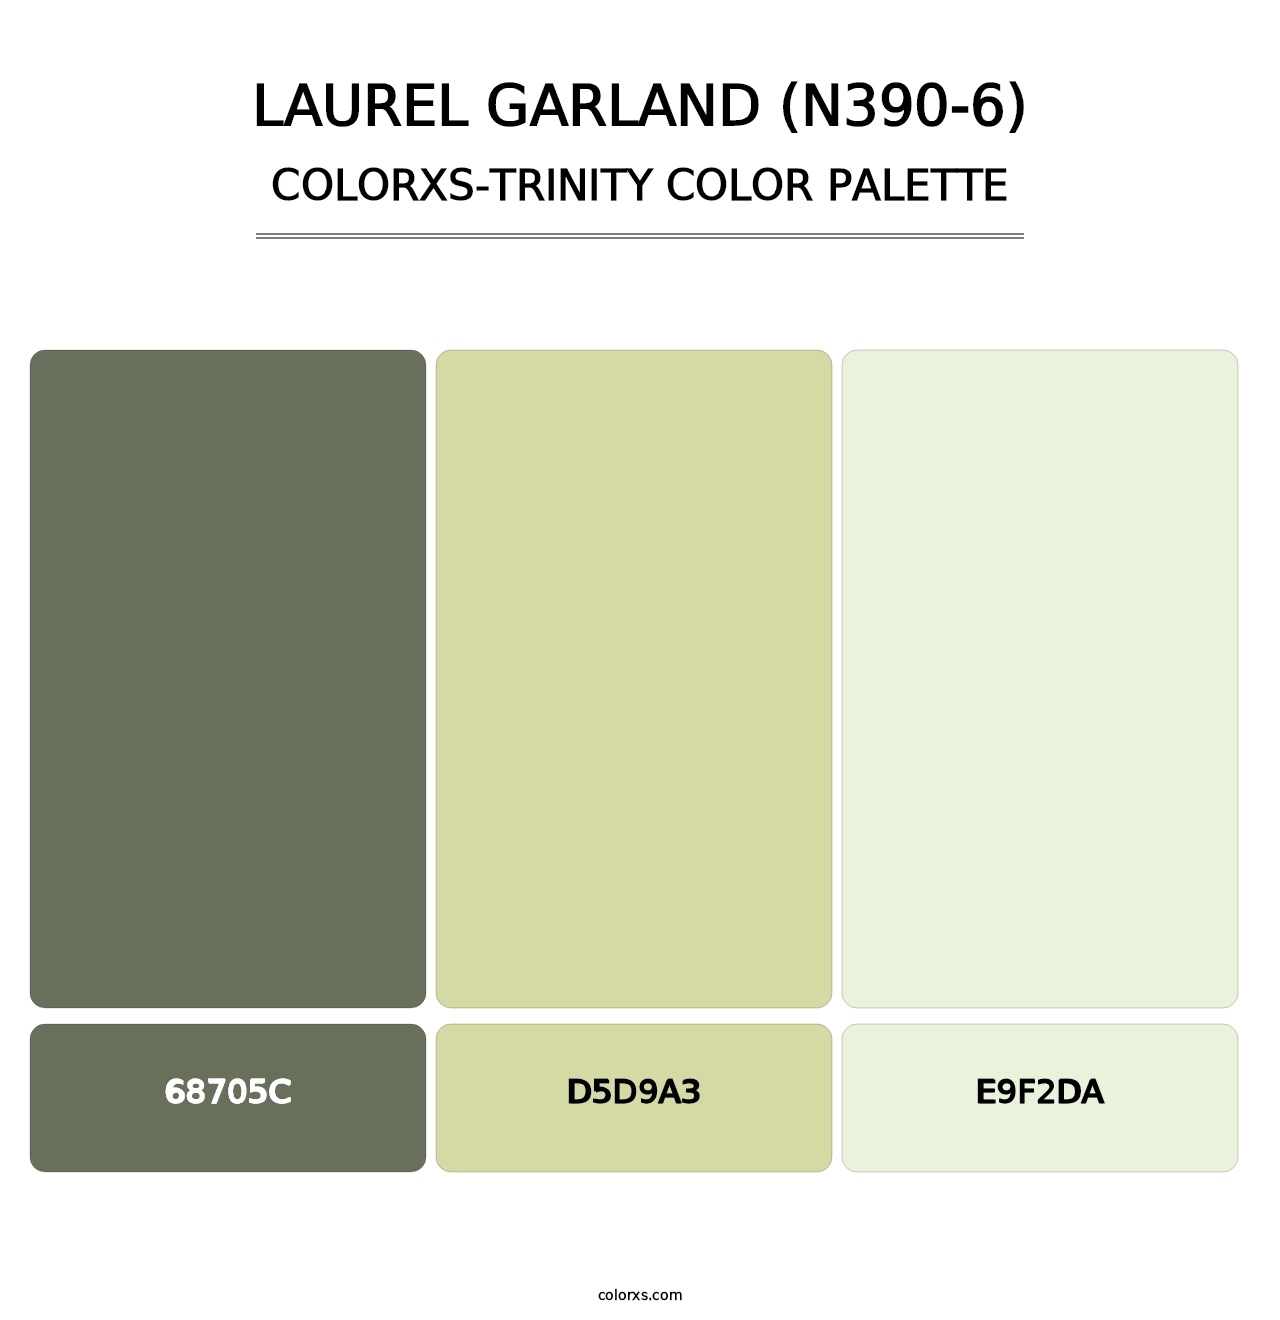 Laurel Garland (N390-6) - Colorxs Trinity Palette